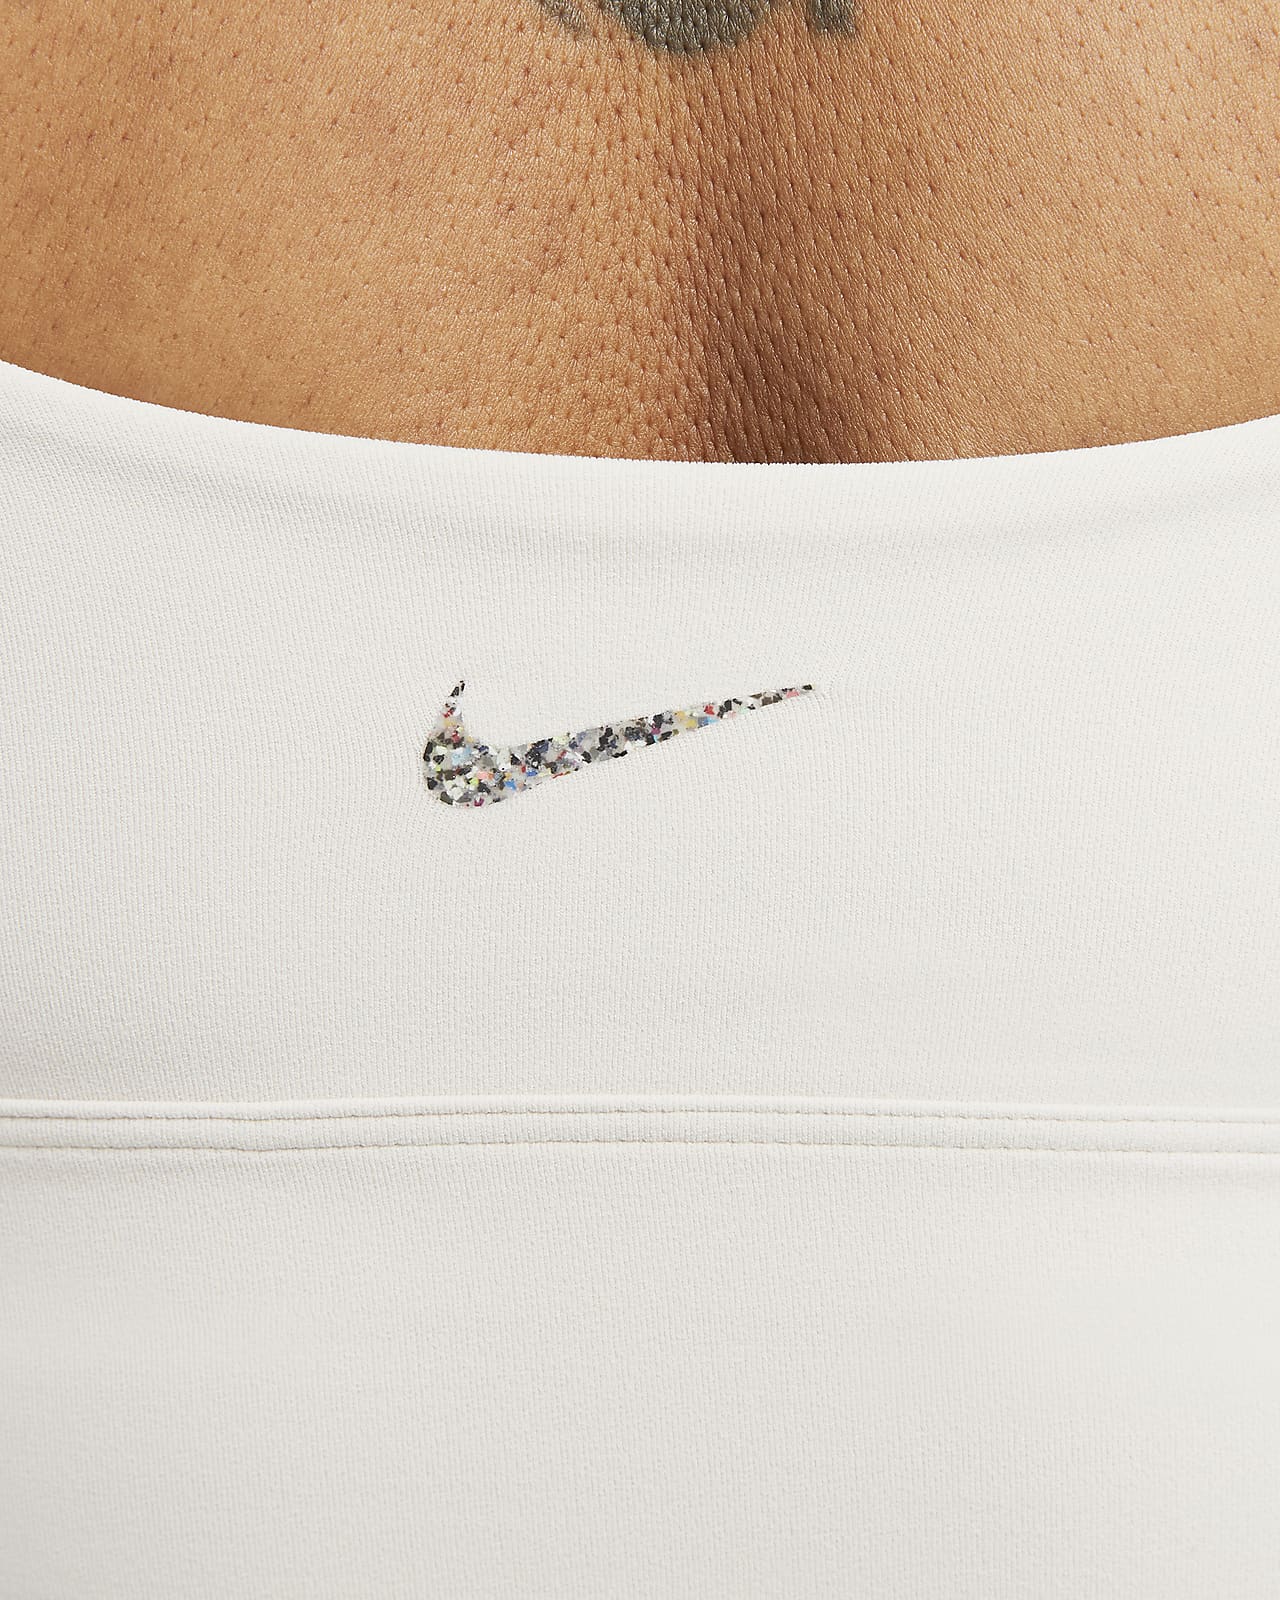 Nike XL Women's Non Padded Sports/Yoga/Pickleball Bra White BV3630